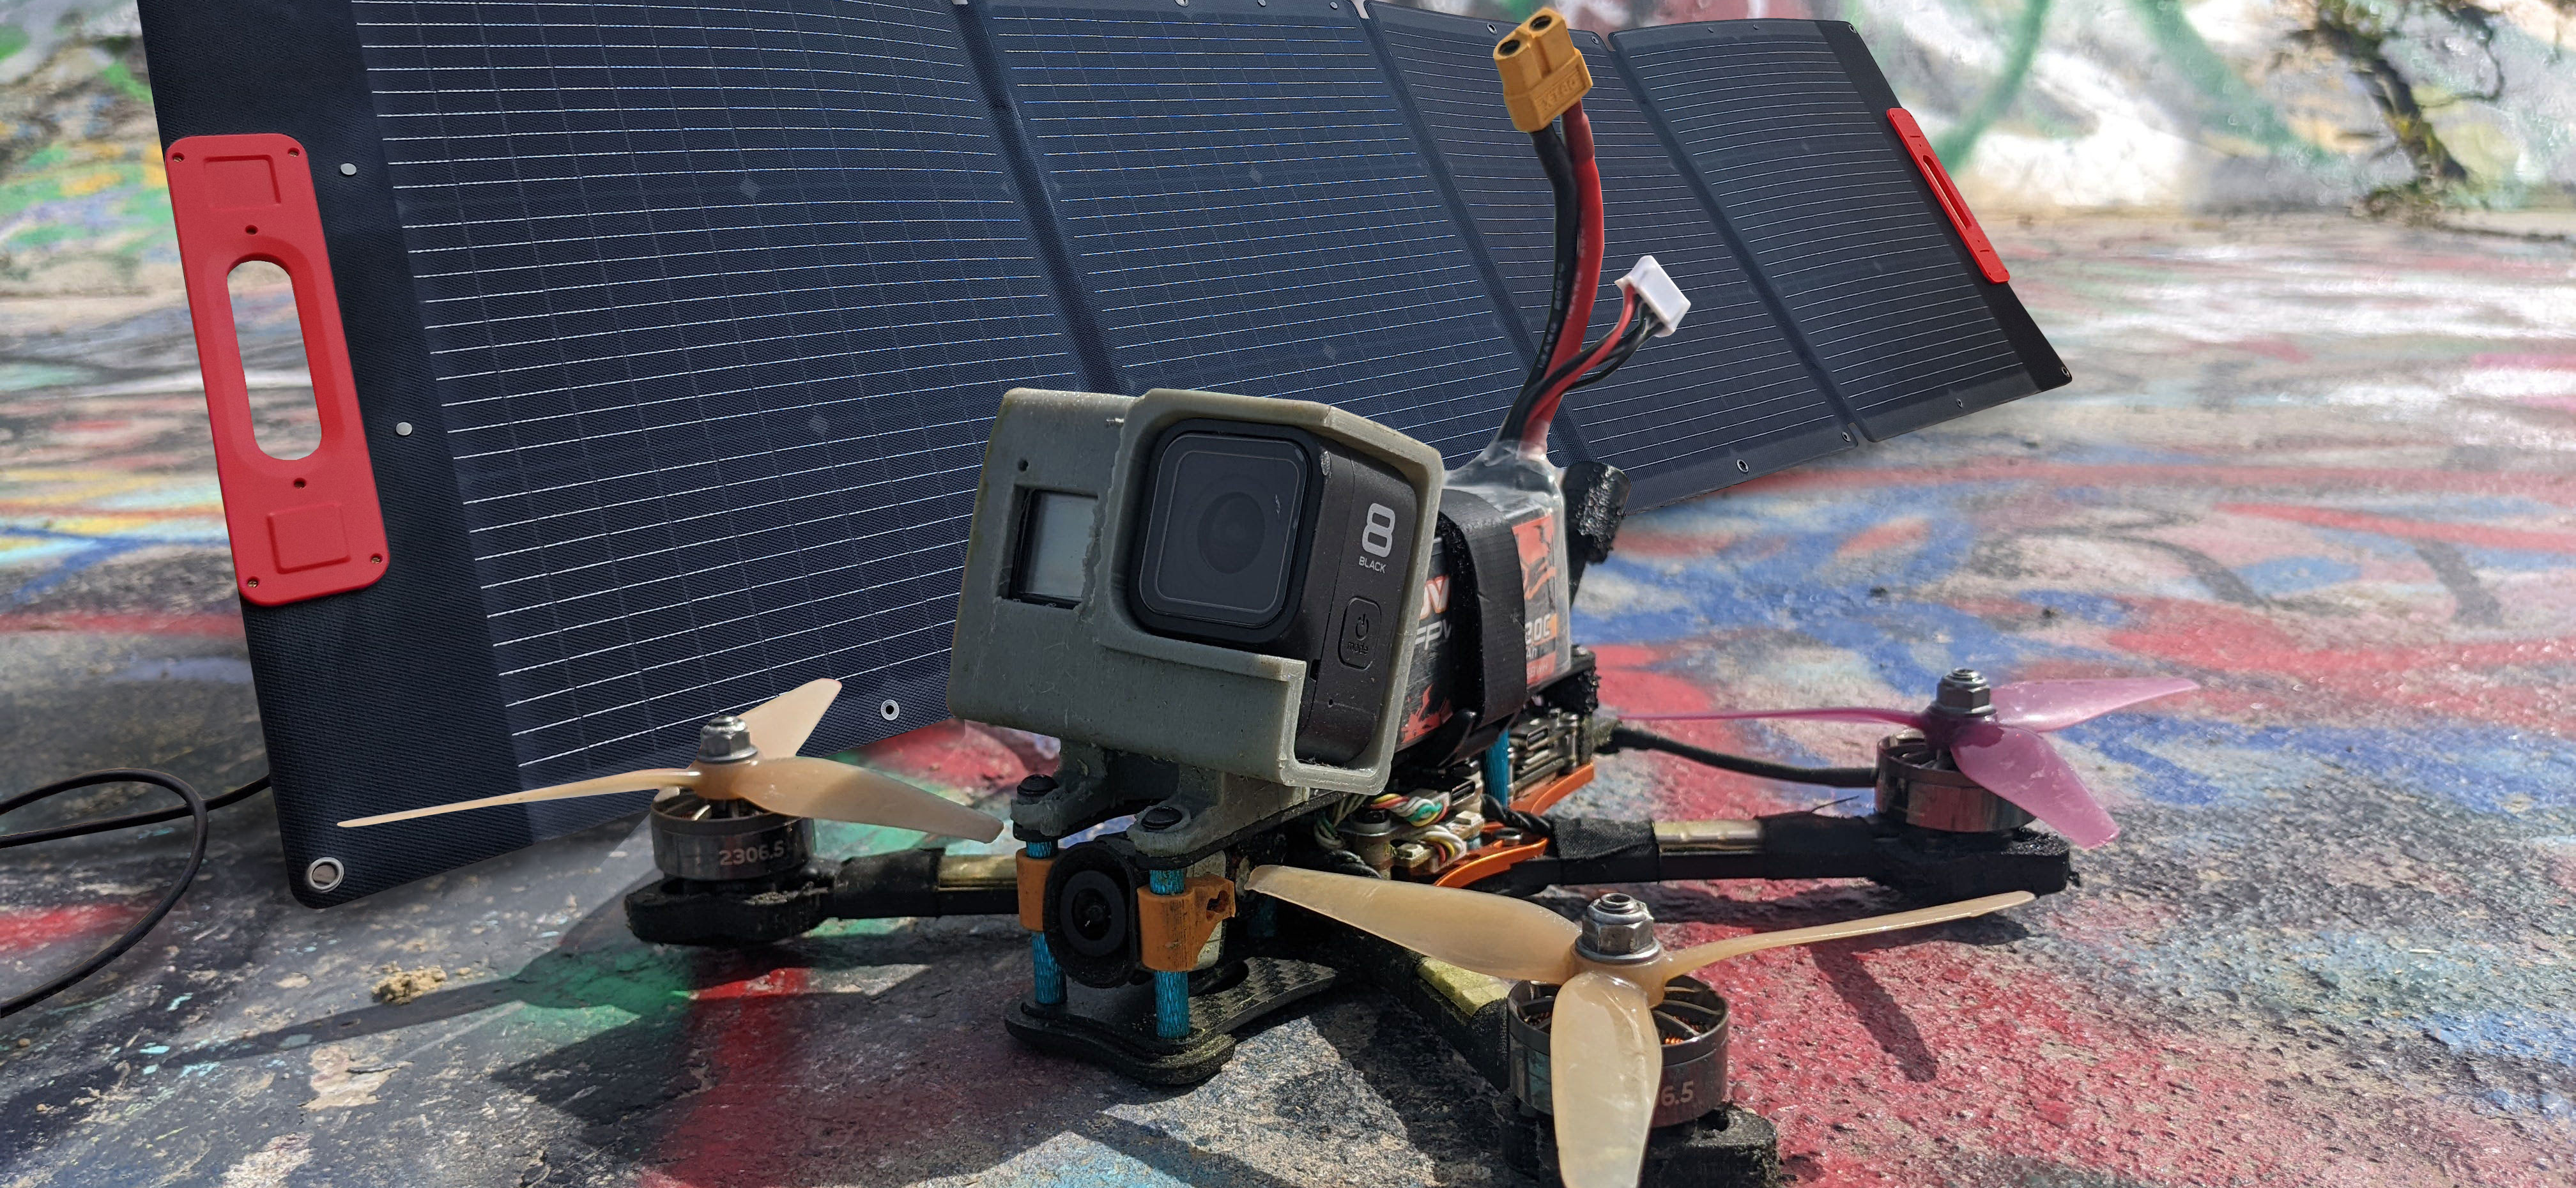 solar panel powernation charging drone